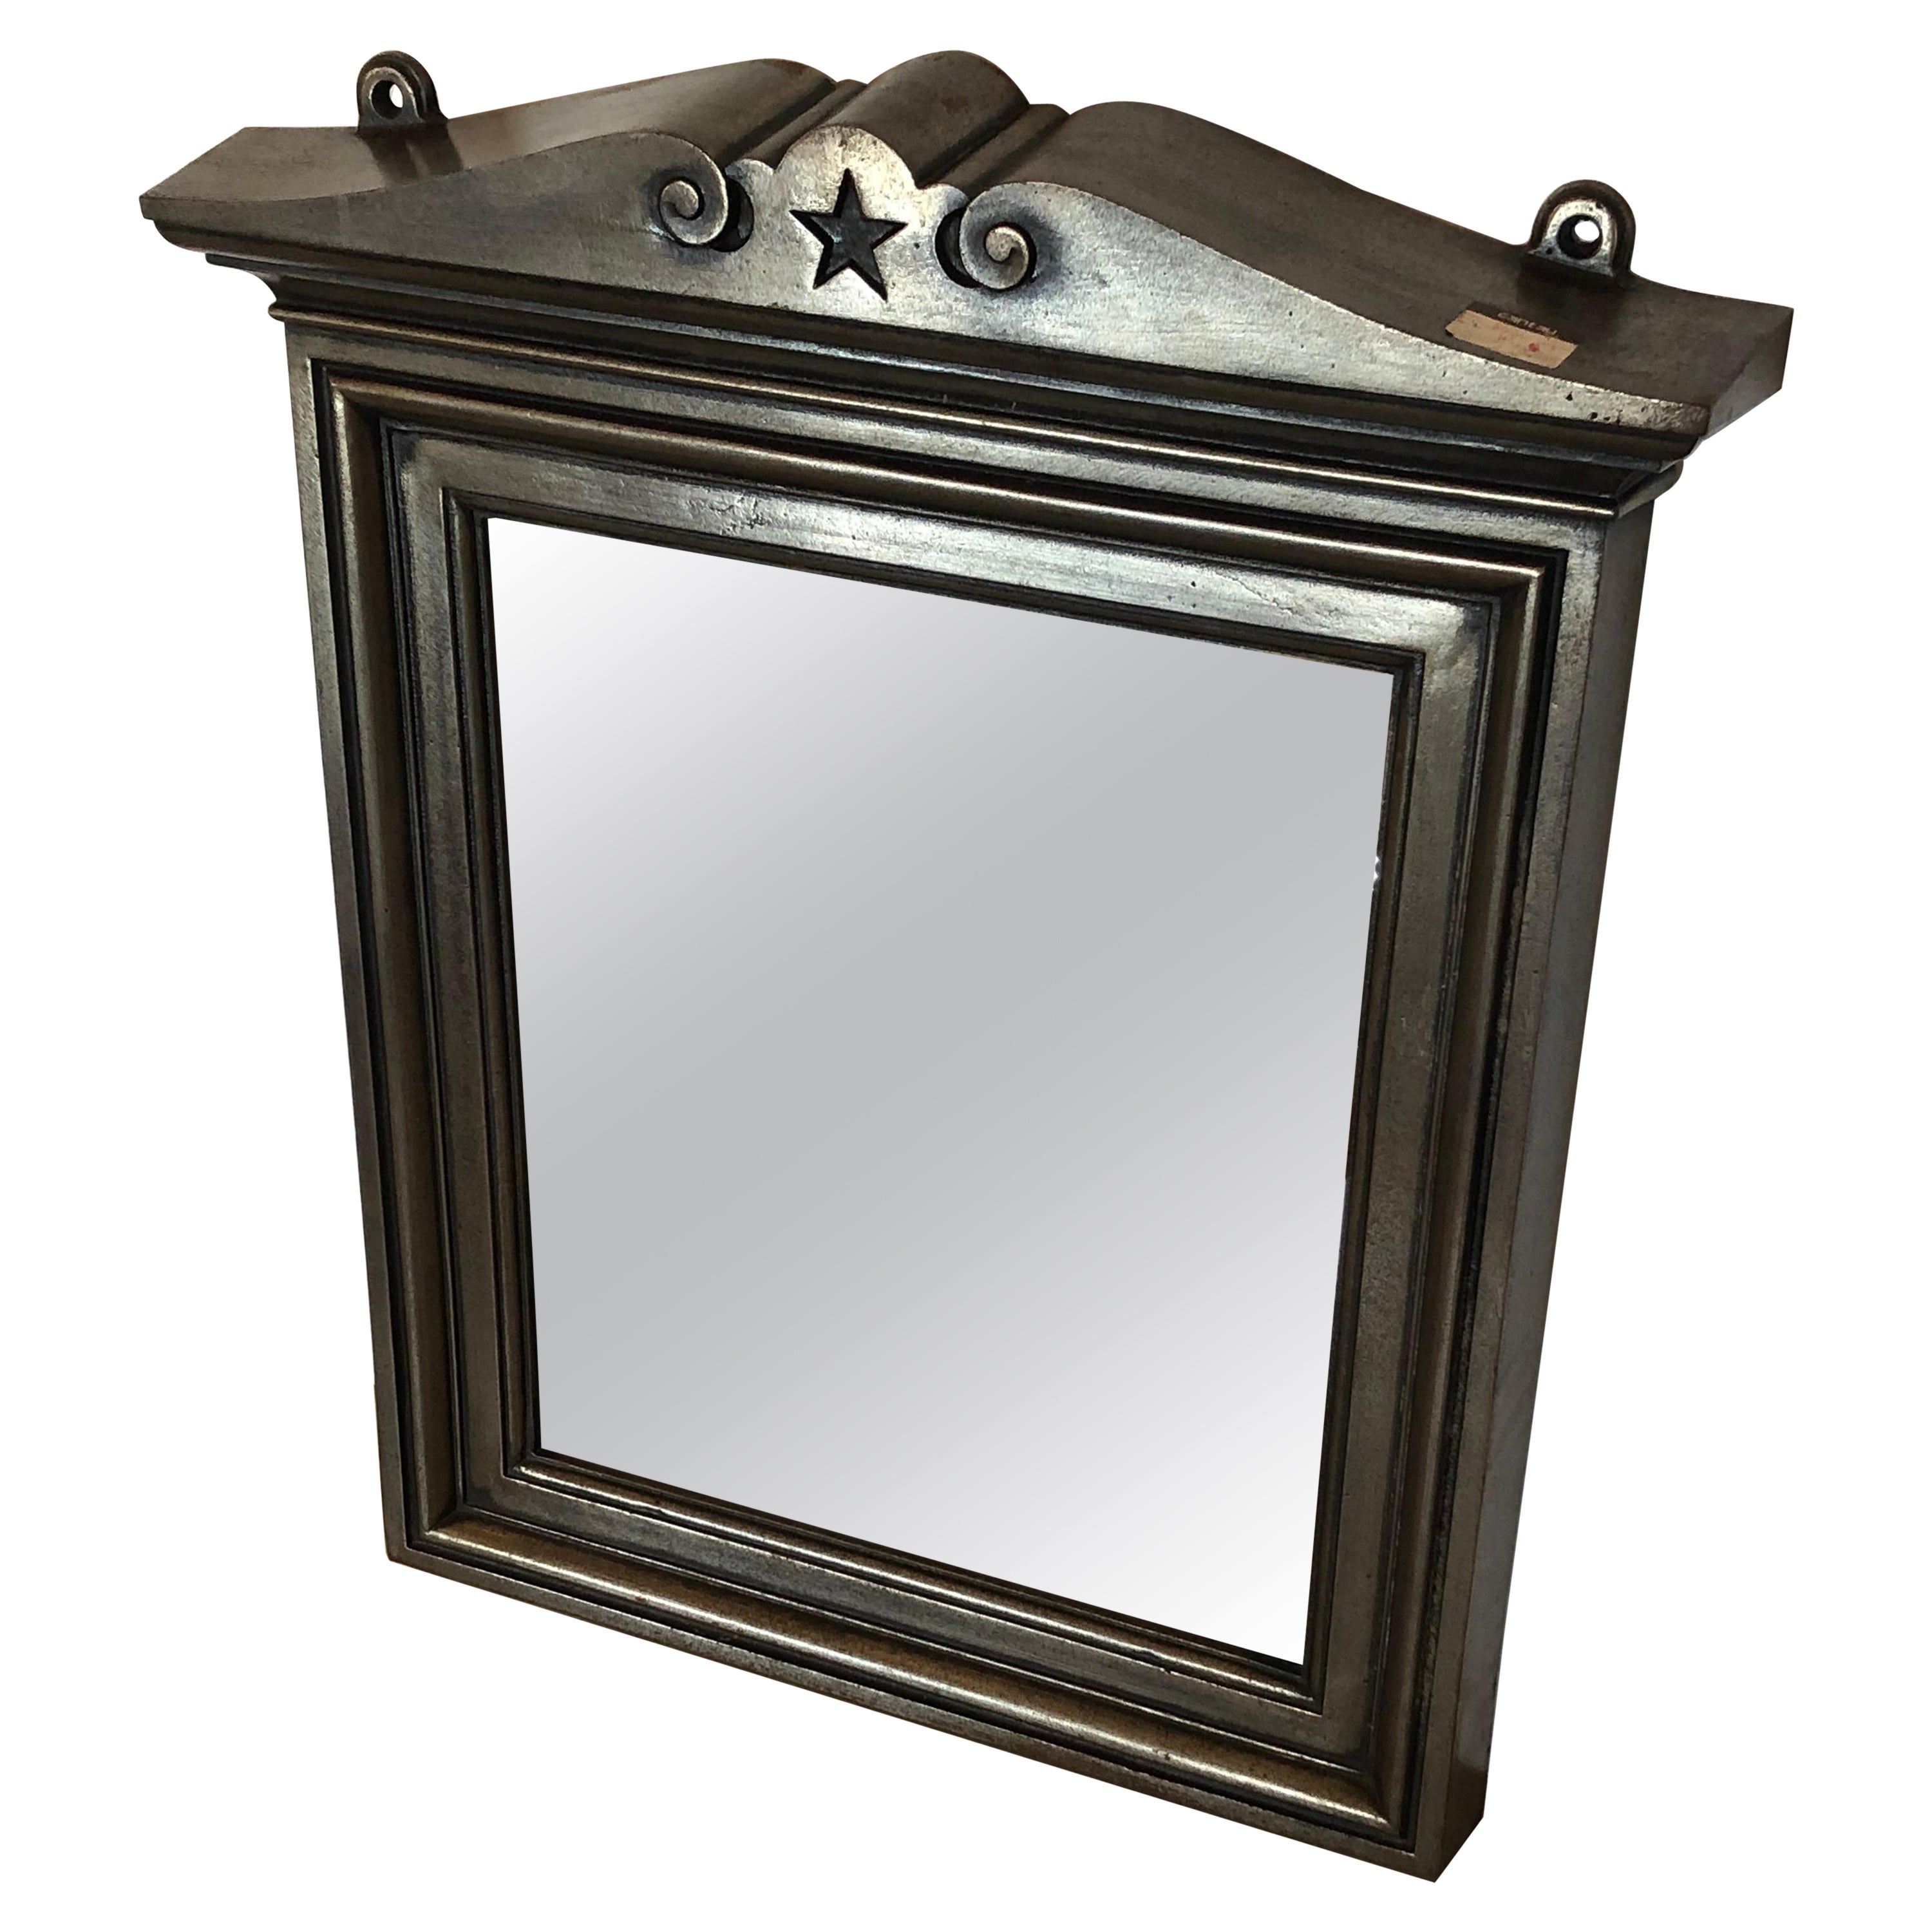 Rare Antique English Architectural Neoclassical Iron Mirror For Sale